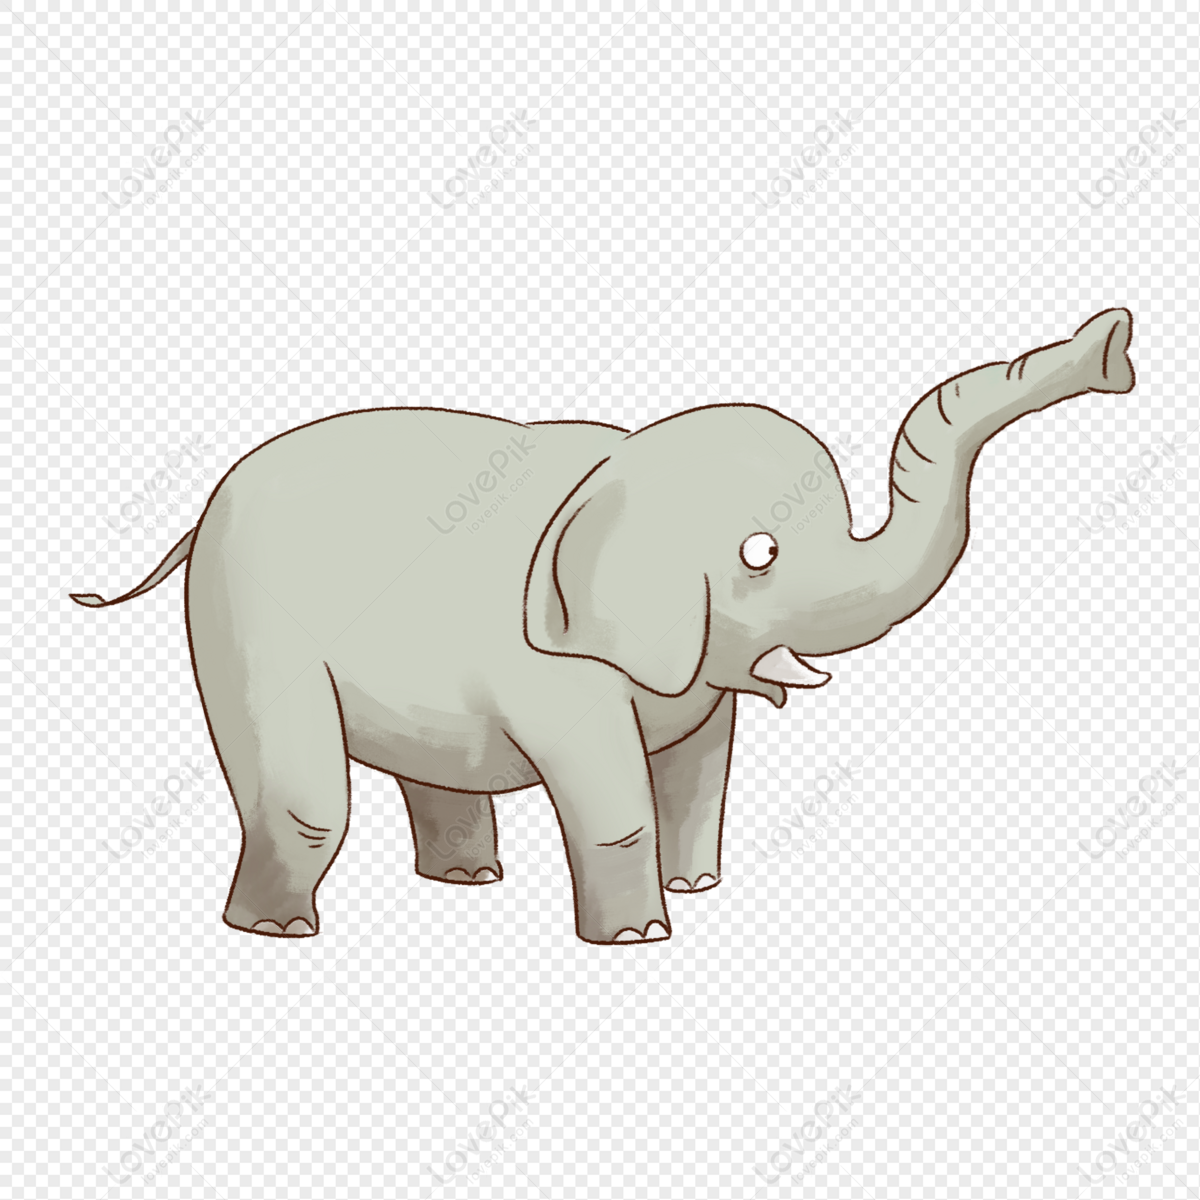 890 Baby Elephant Cartoon Stock Photos - Free & Royalty-Free Stock Photos  from Dreamstime